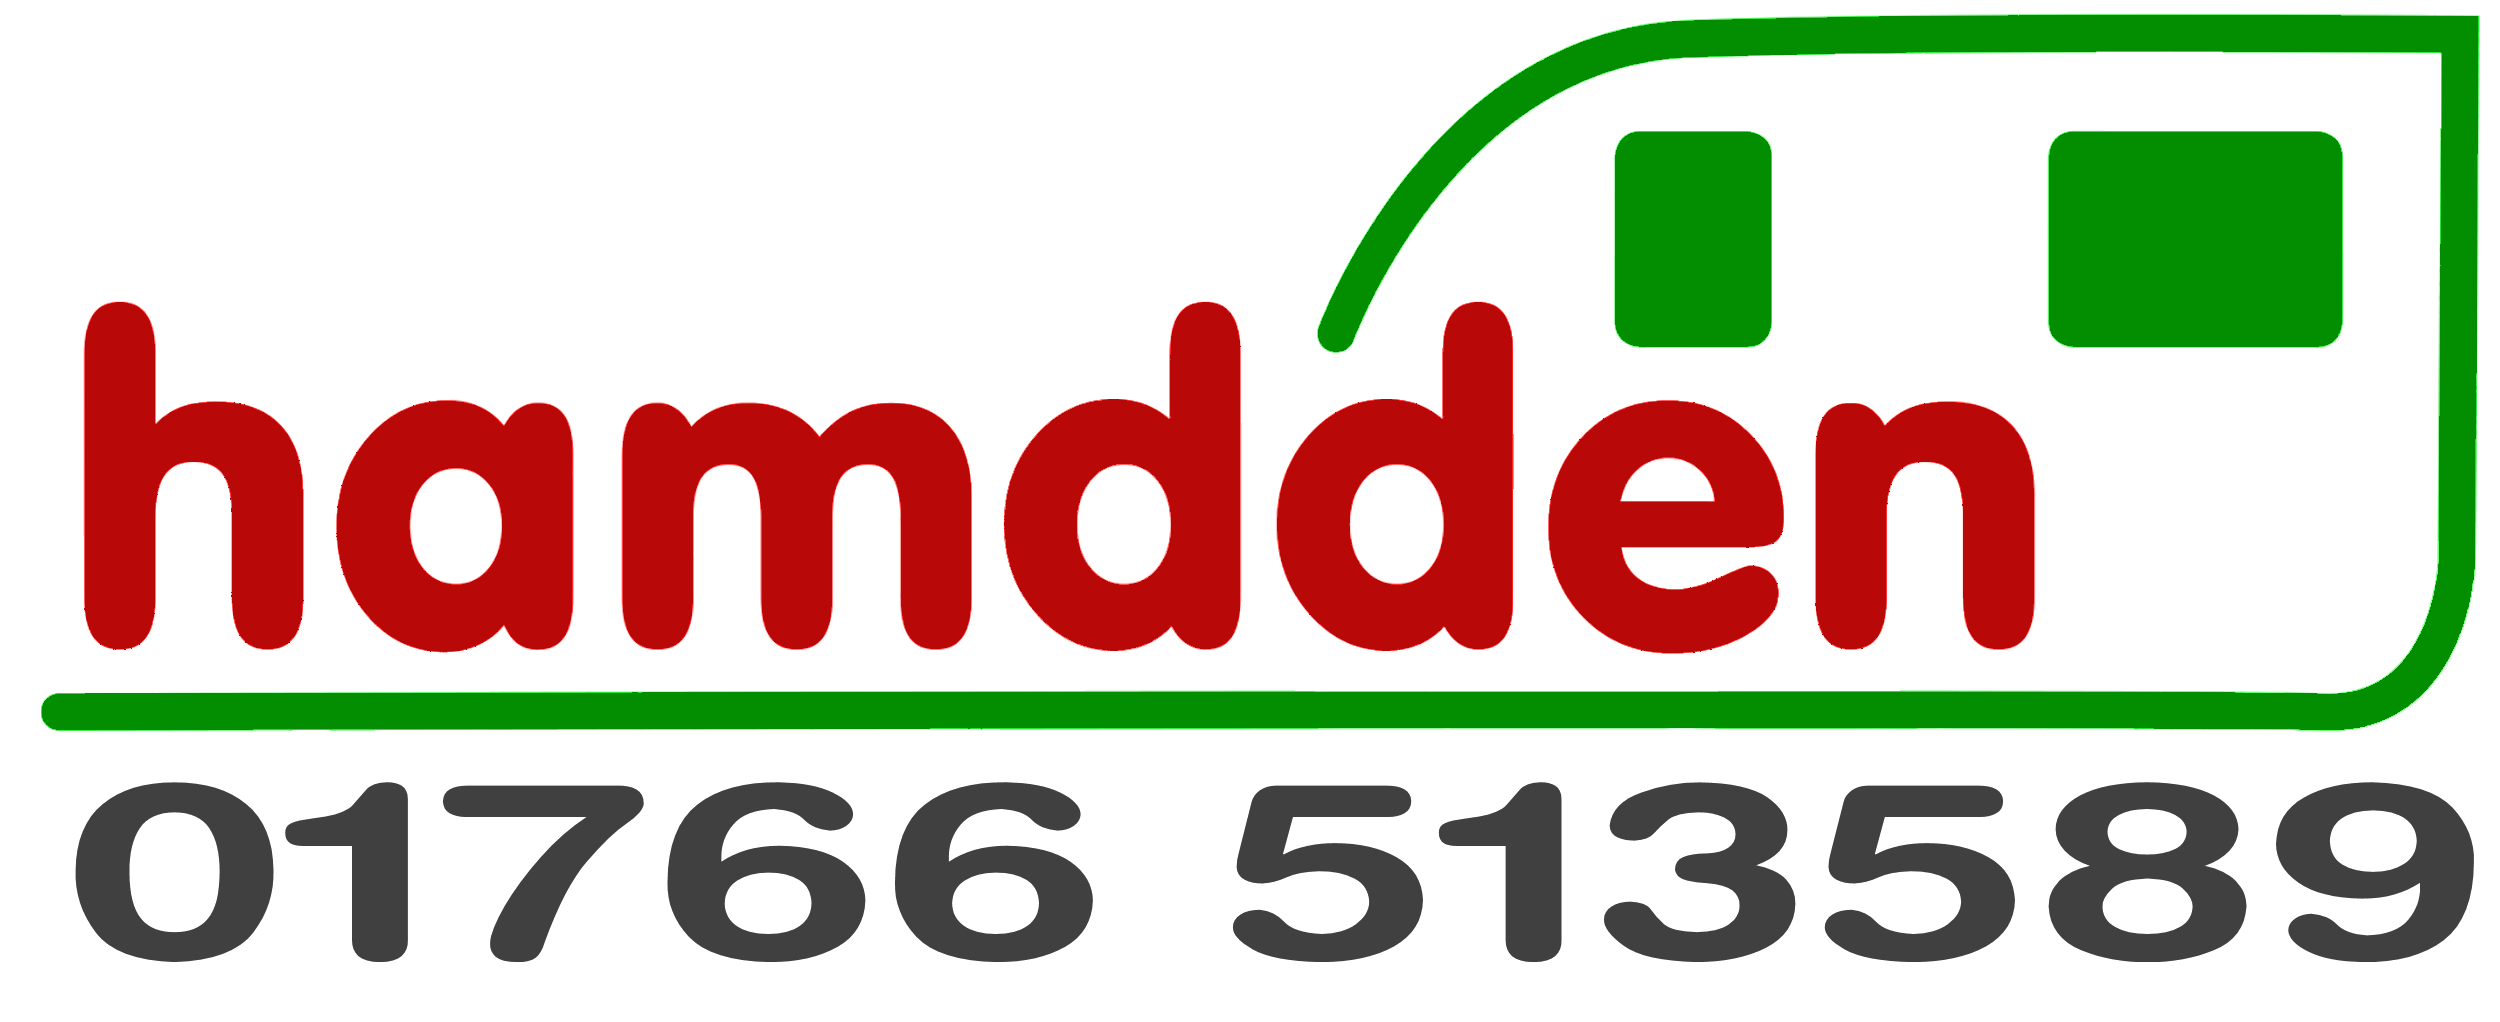 hamdden-Logo-with-phone